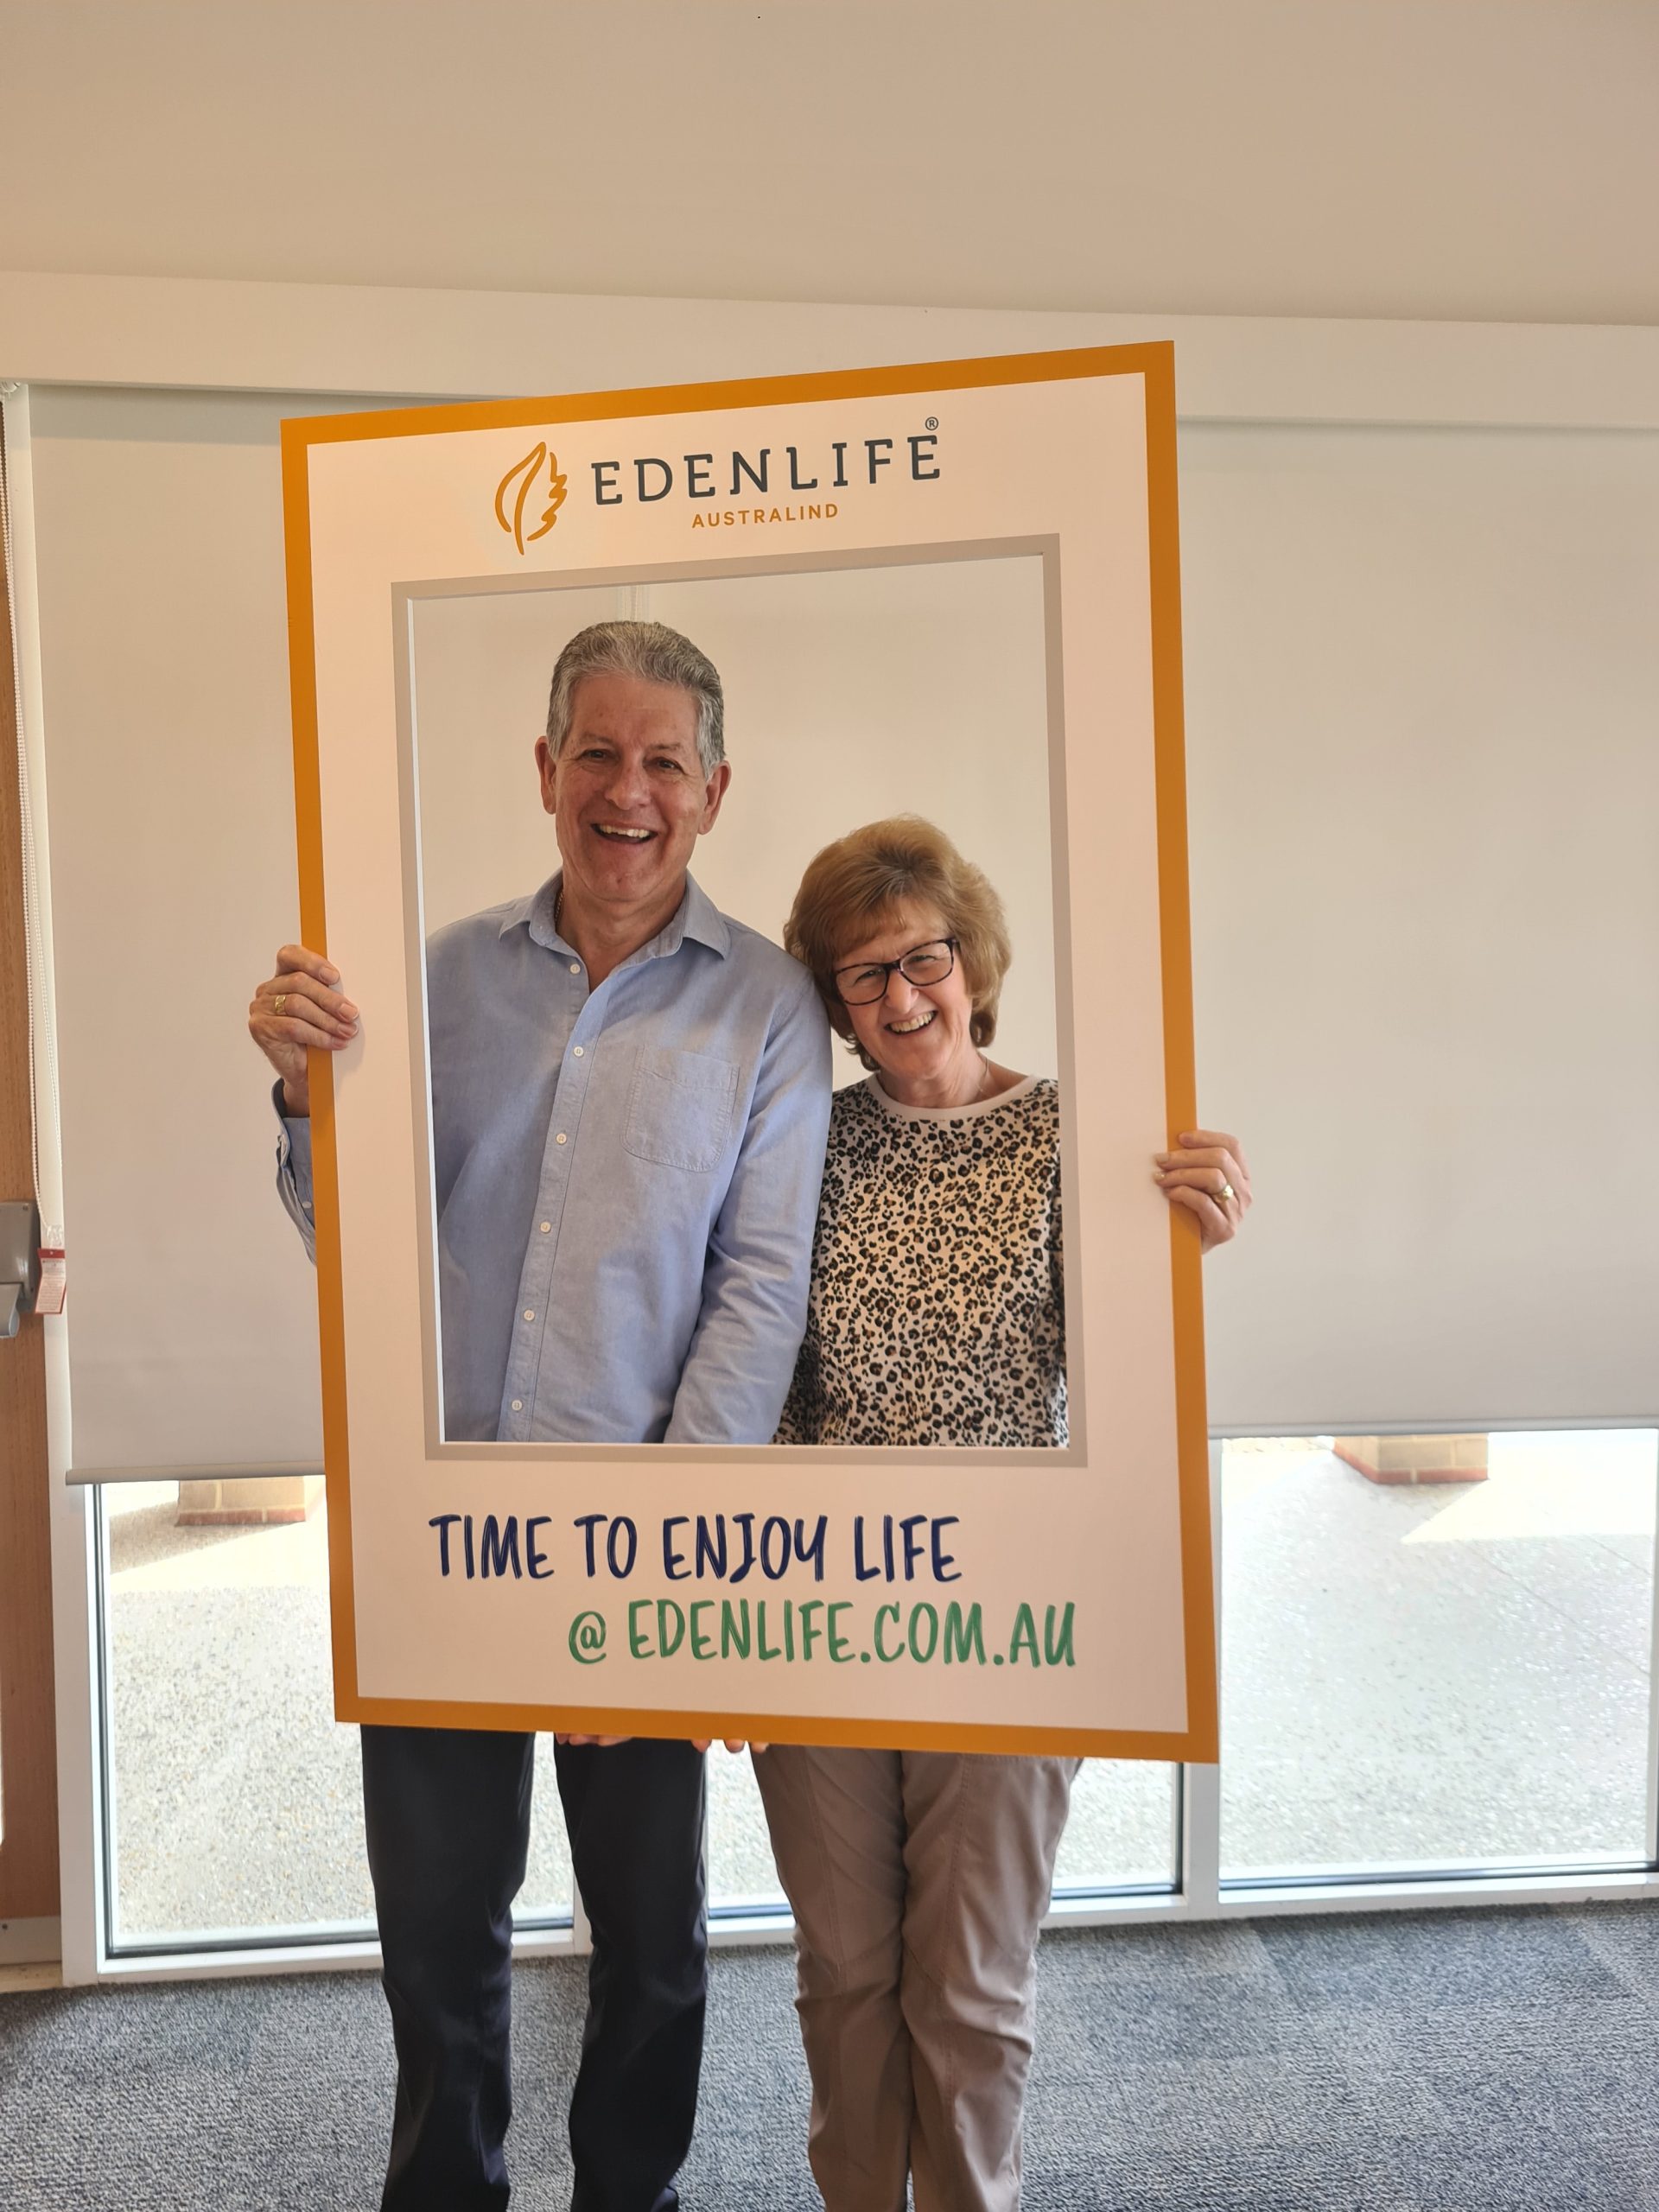 Edenlife Australind residents, Jim & Lyn